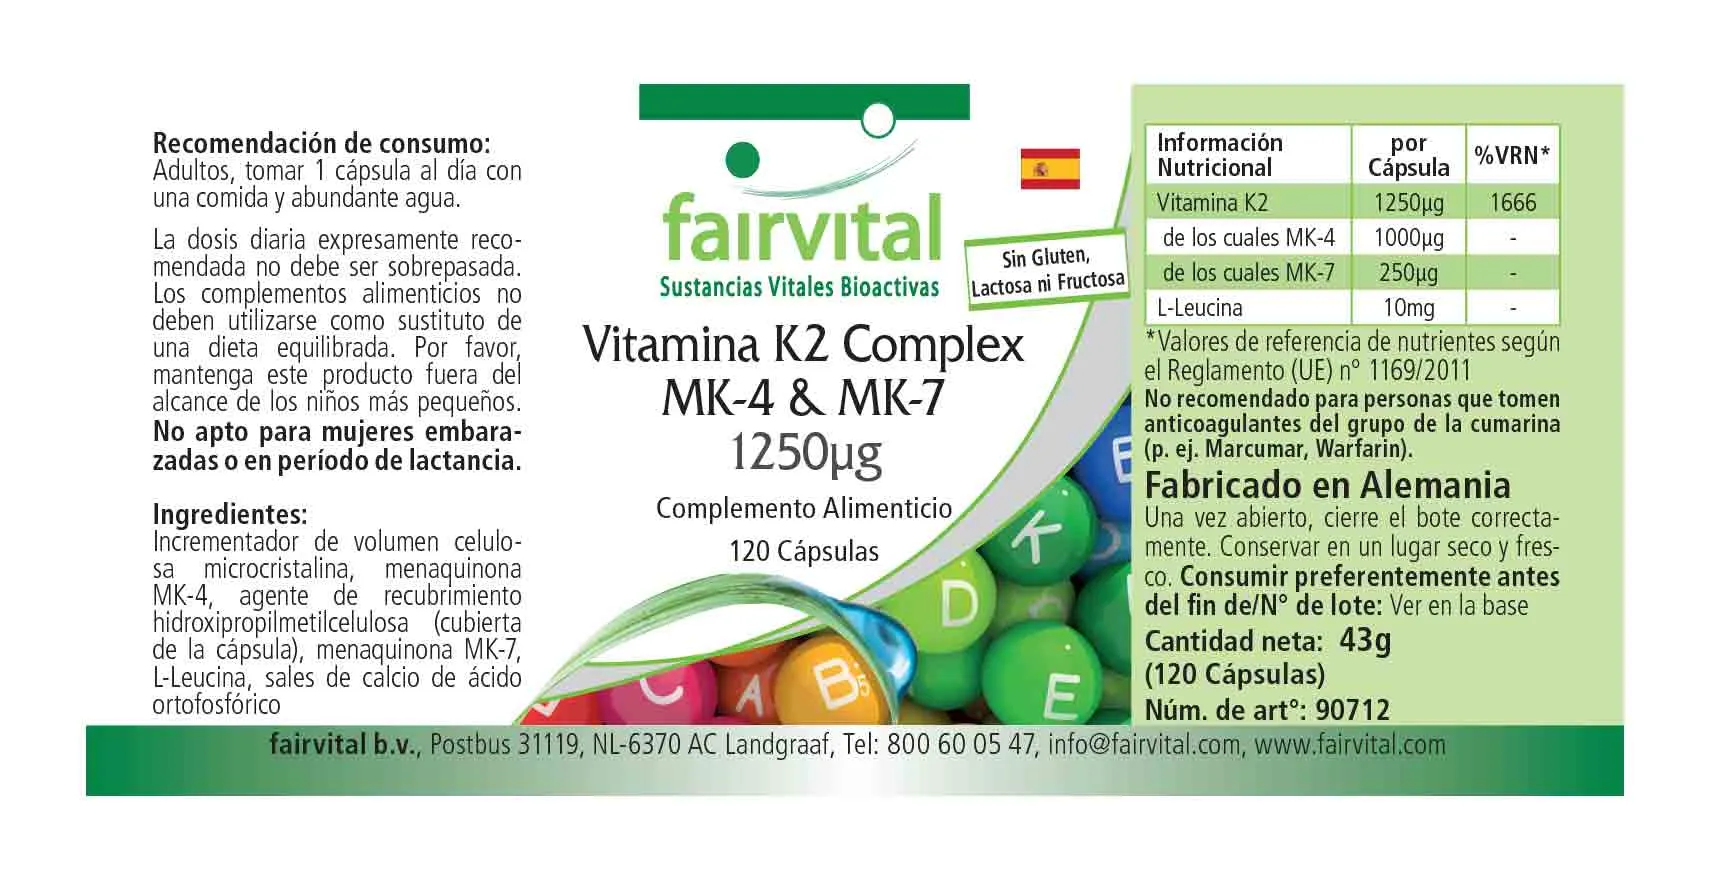 Vitamine K2 complexe MK-4 & MK-7 1250µg - 120 gélules